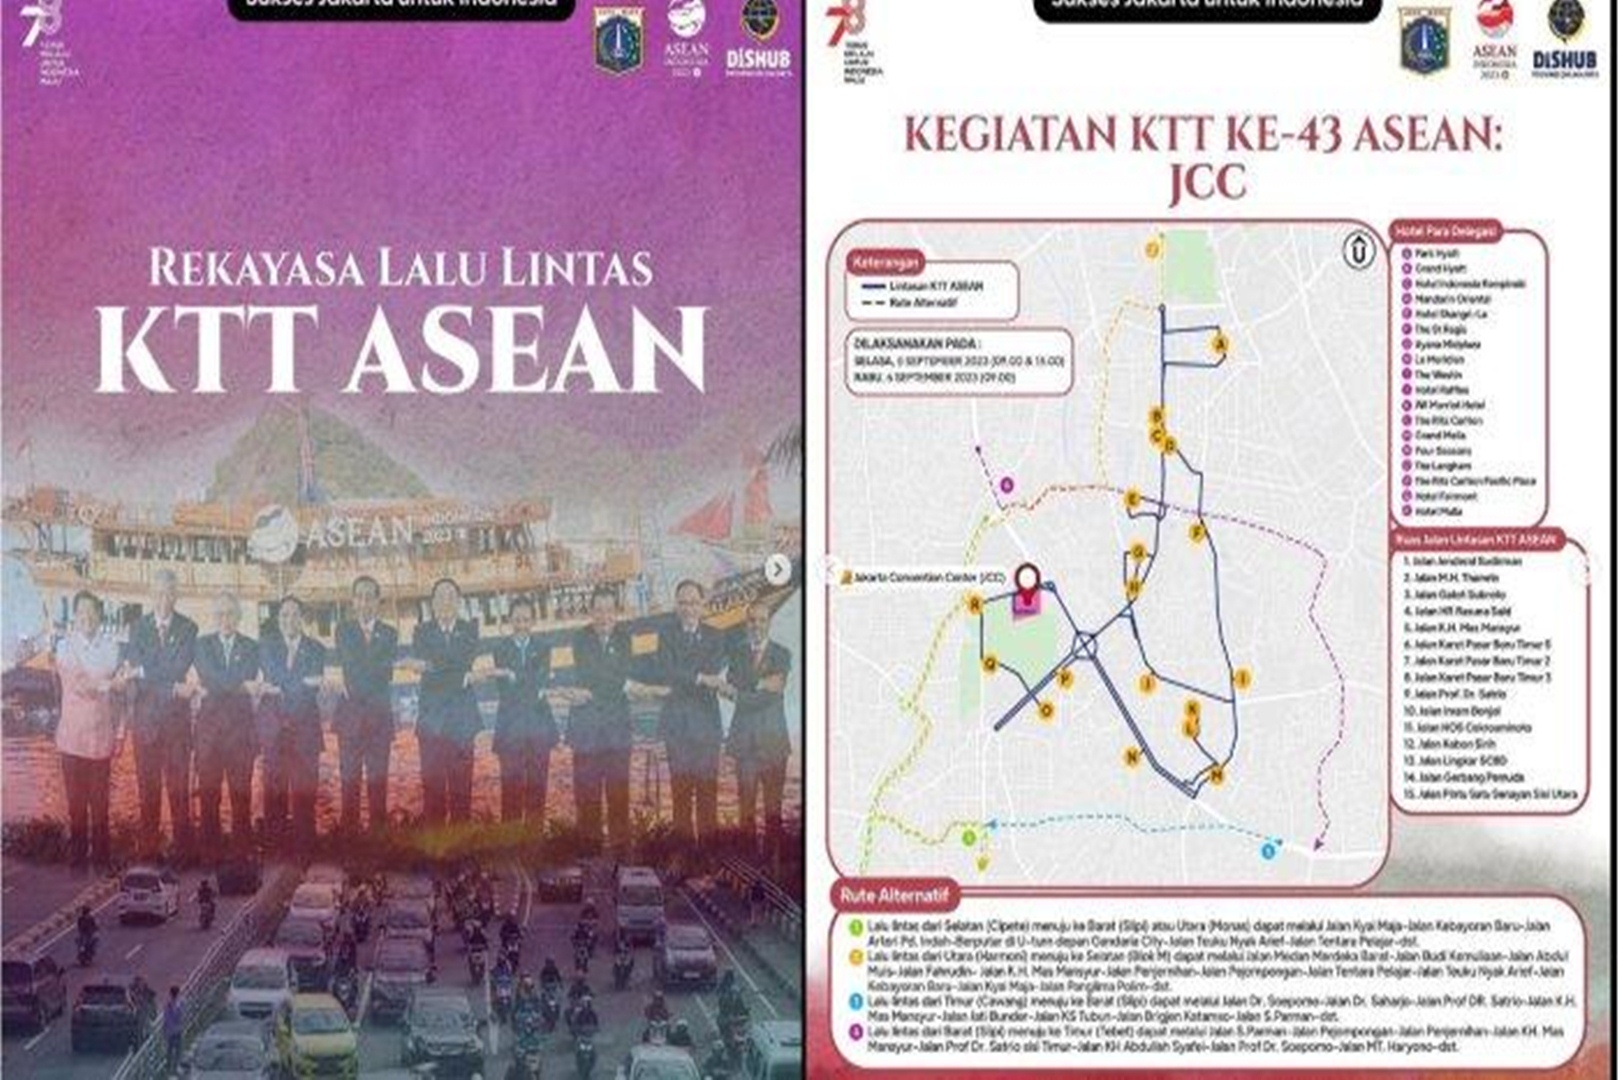 Ini Dia Jadwal dan Rute Rekayasa Lalu Lintas Gelaran KTT ASEAN di Jakarta